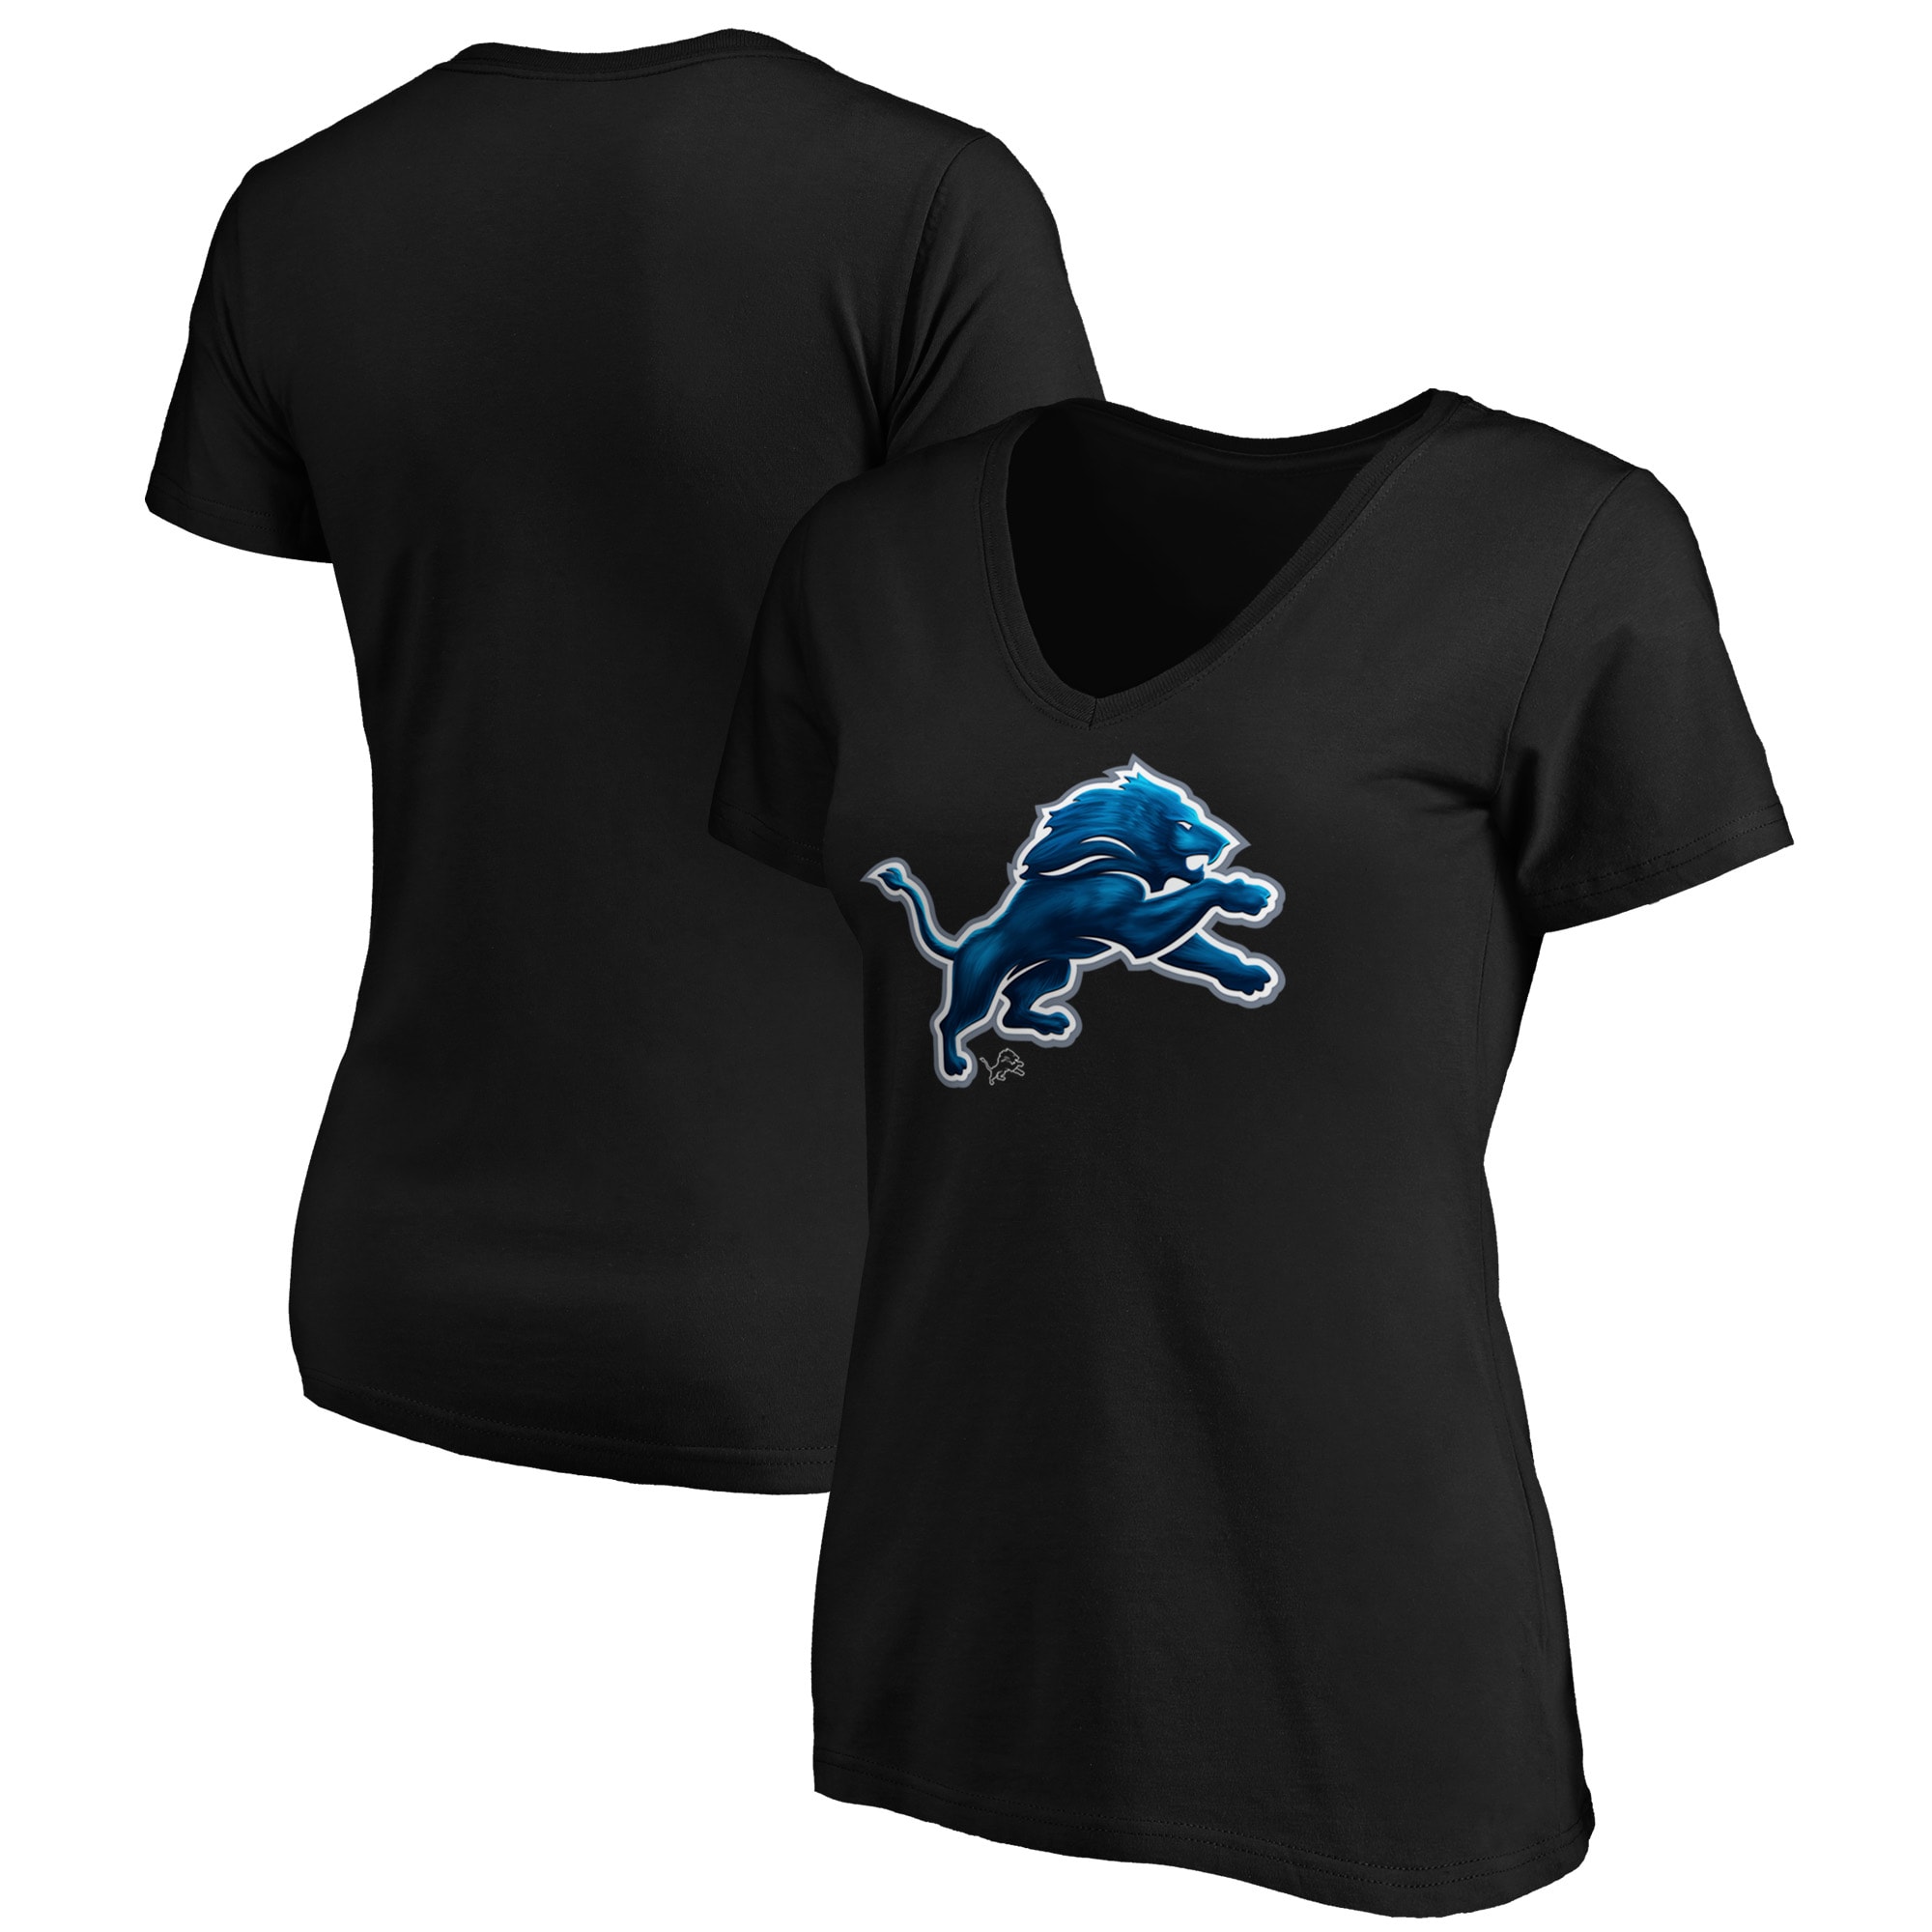 Women's Fanatics Branded Black Detroit Lions Midnight Mascot Logo V-Neck T-Shirt - image 1 of 3